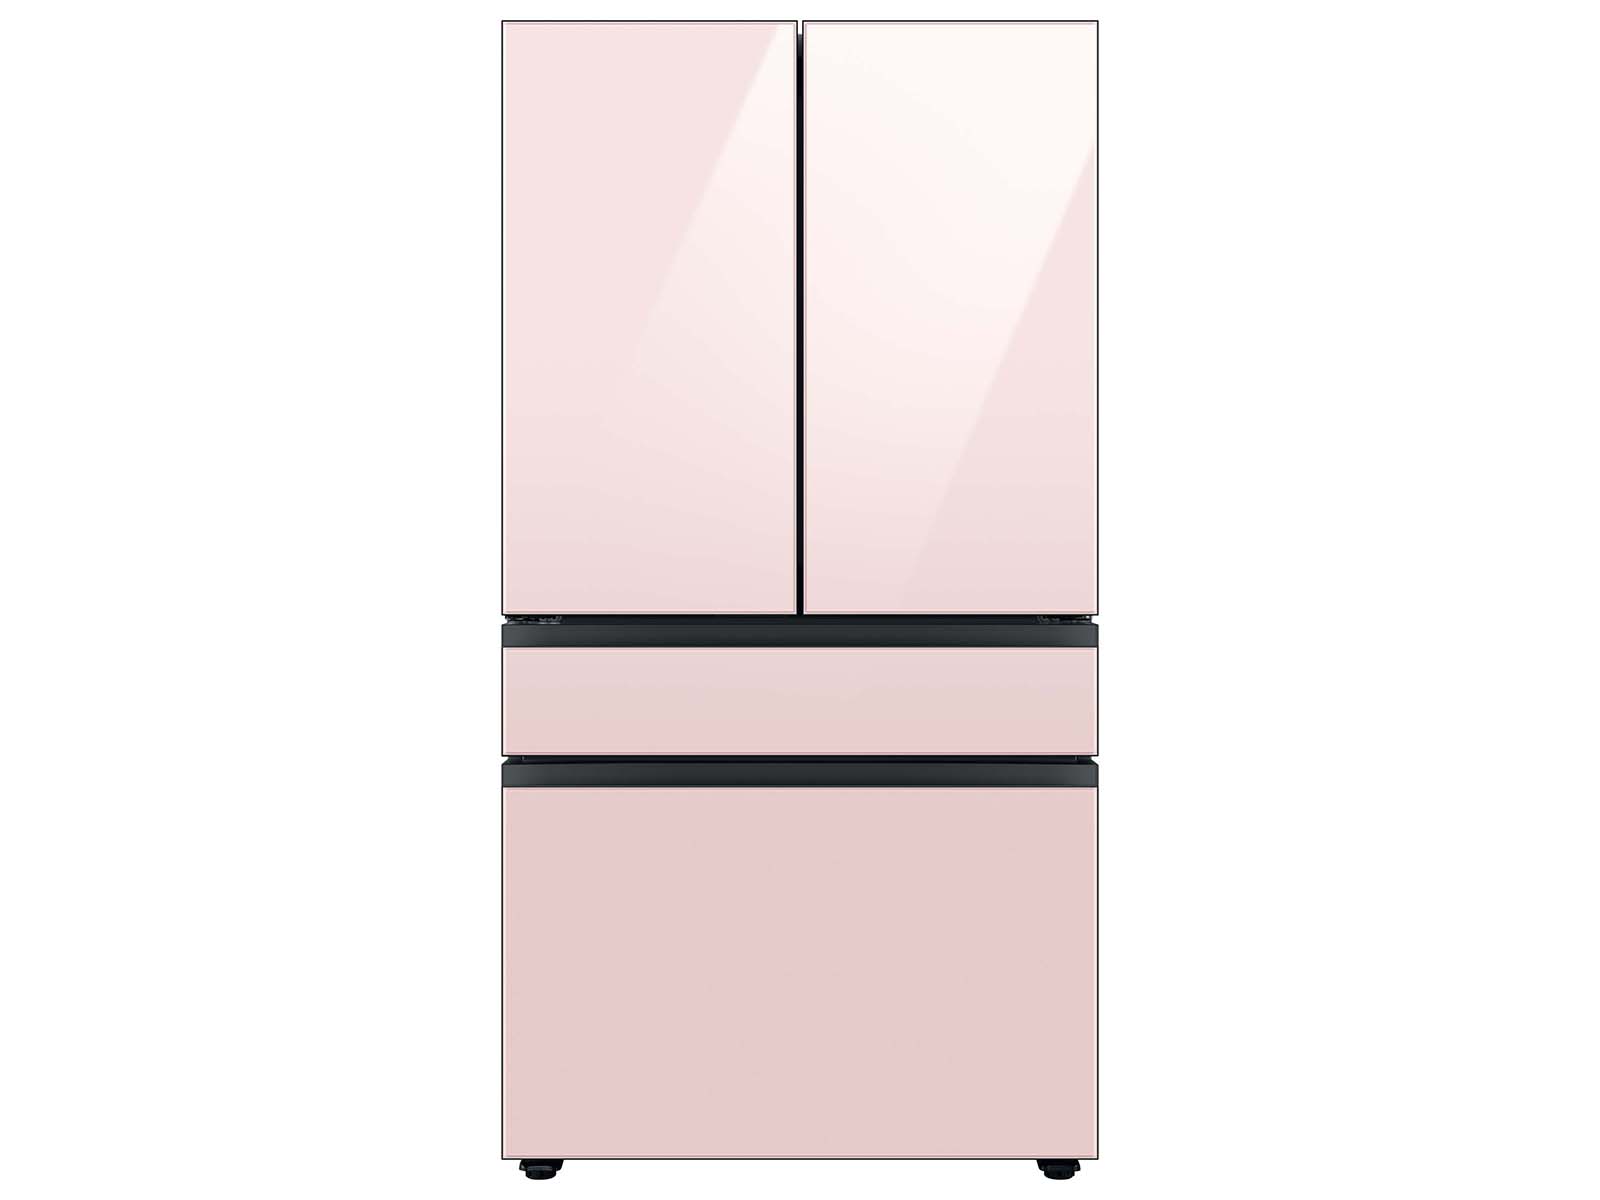 Samsung Bespoke 4-Door French Door Refrigerator in White Glass (23 cu. ft.) with Customizable Door Panel Colors and Beverage Center™ in Rose Pink Glass